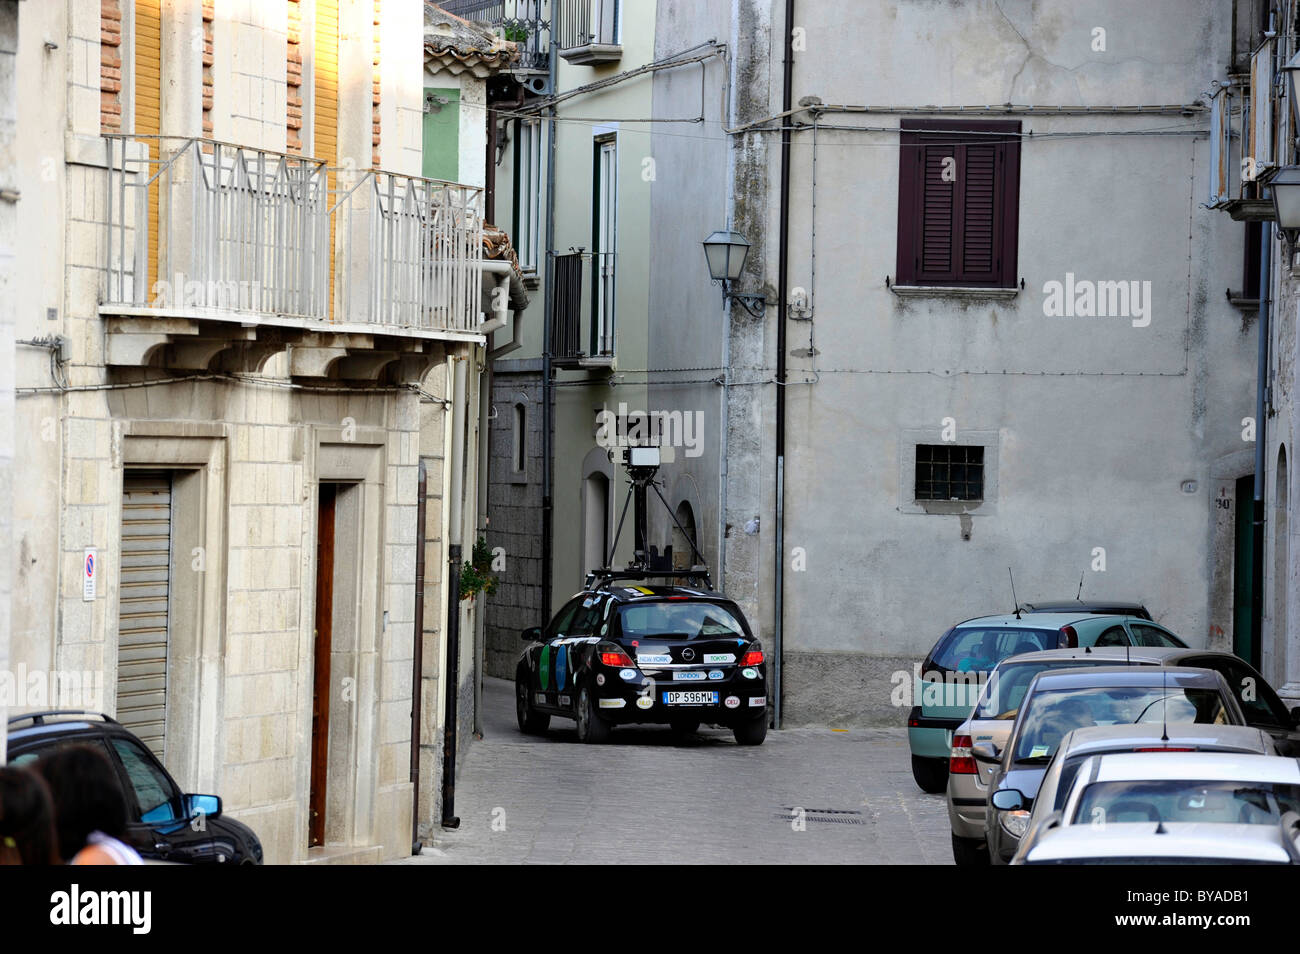 Google Street View car with a special camera, Trivento, Molise region, Italy, Europe Stock Photo